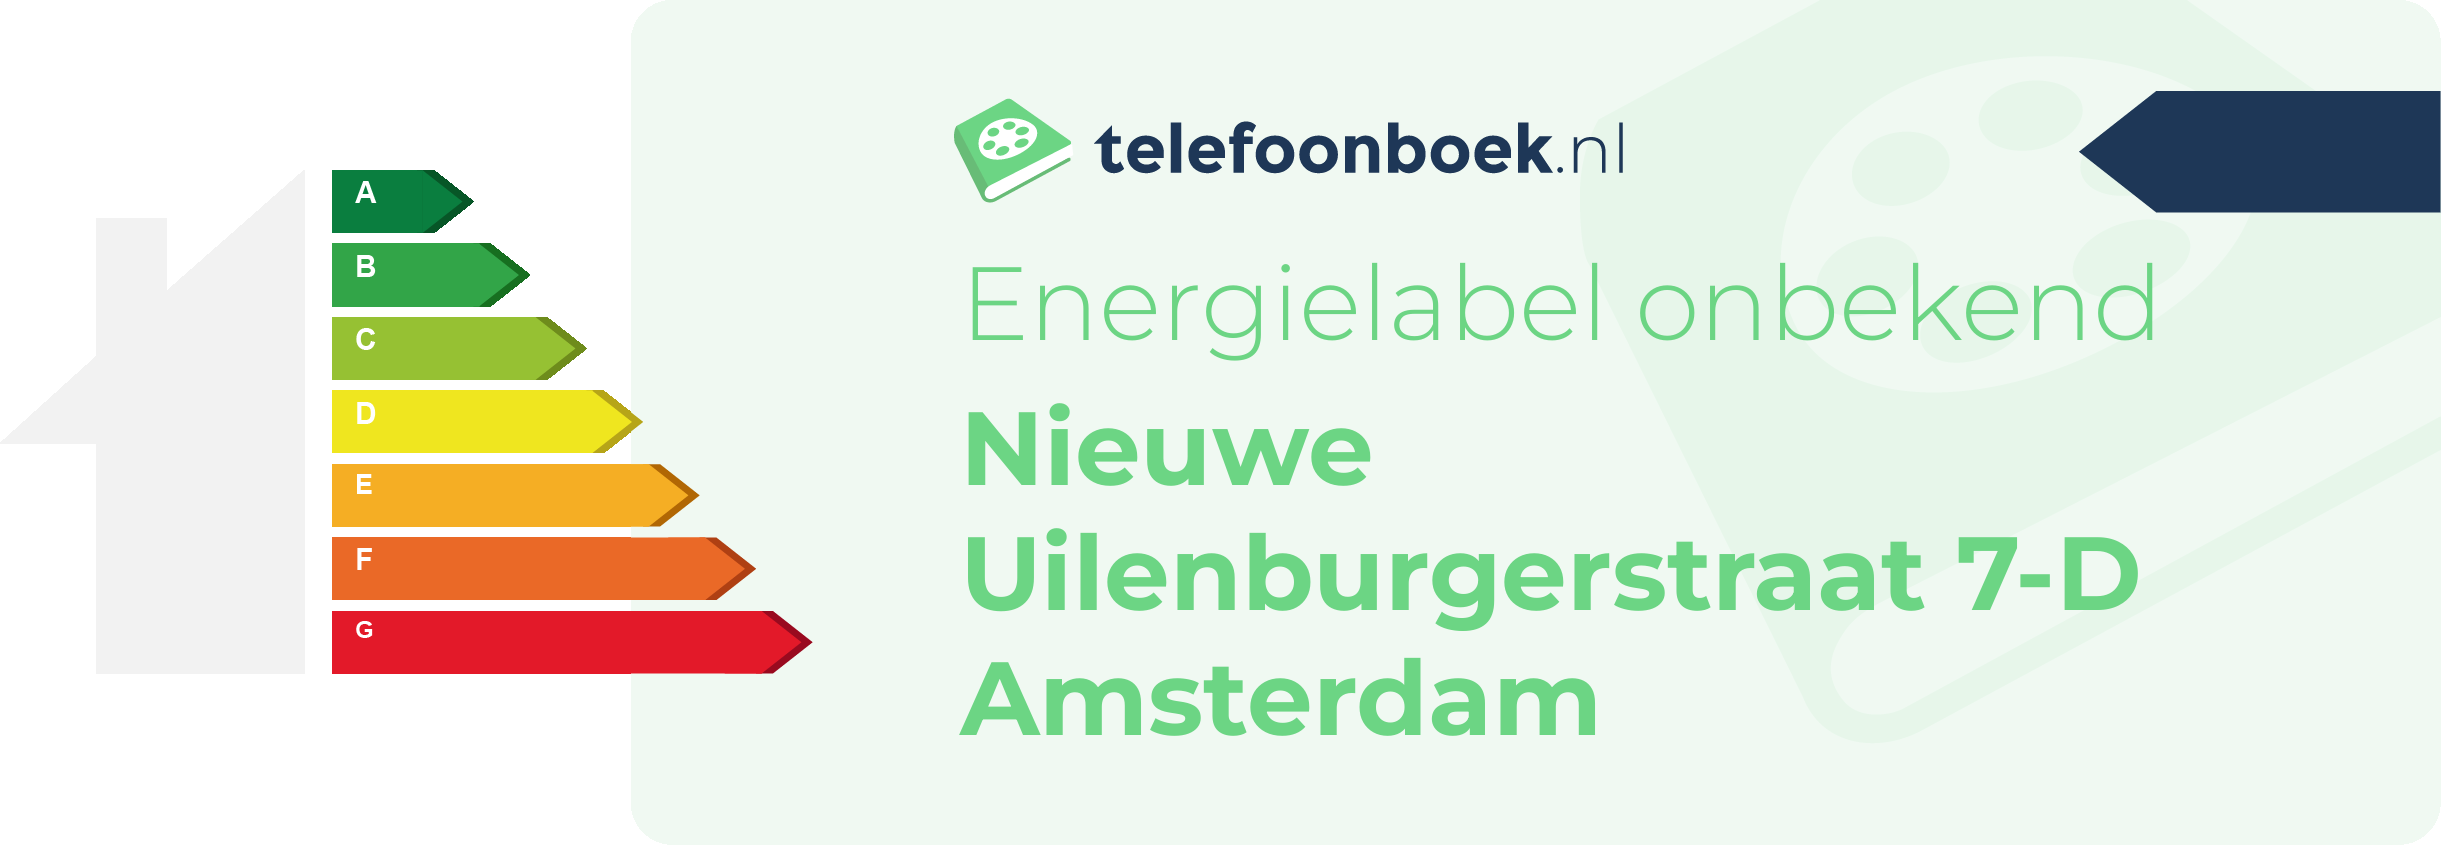 Energielabel Nieuwe Uilenburgerstraat 7-D Amsterdam